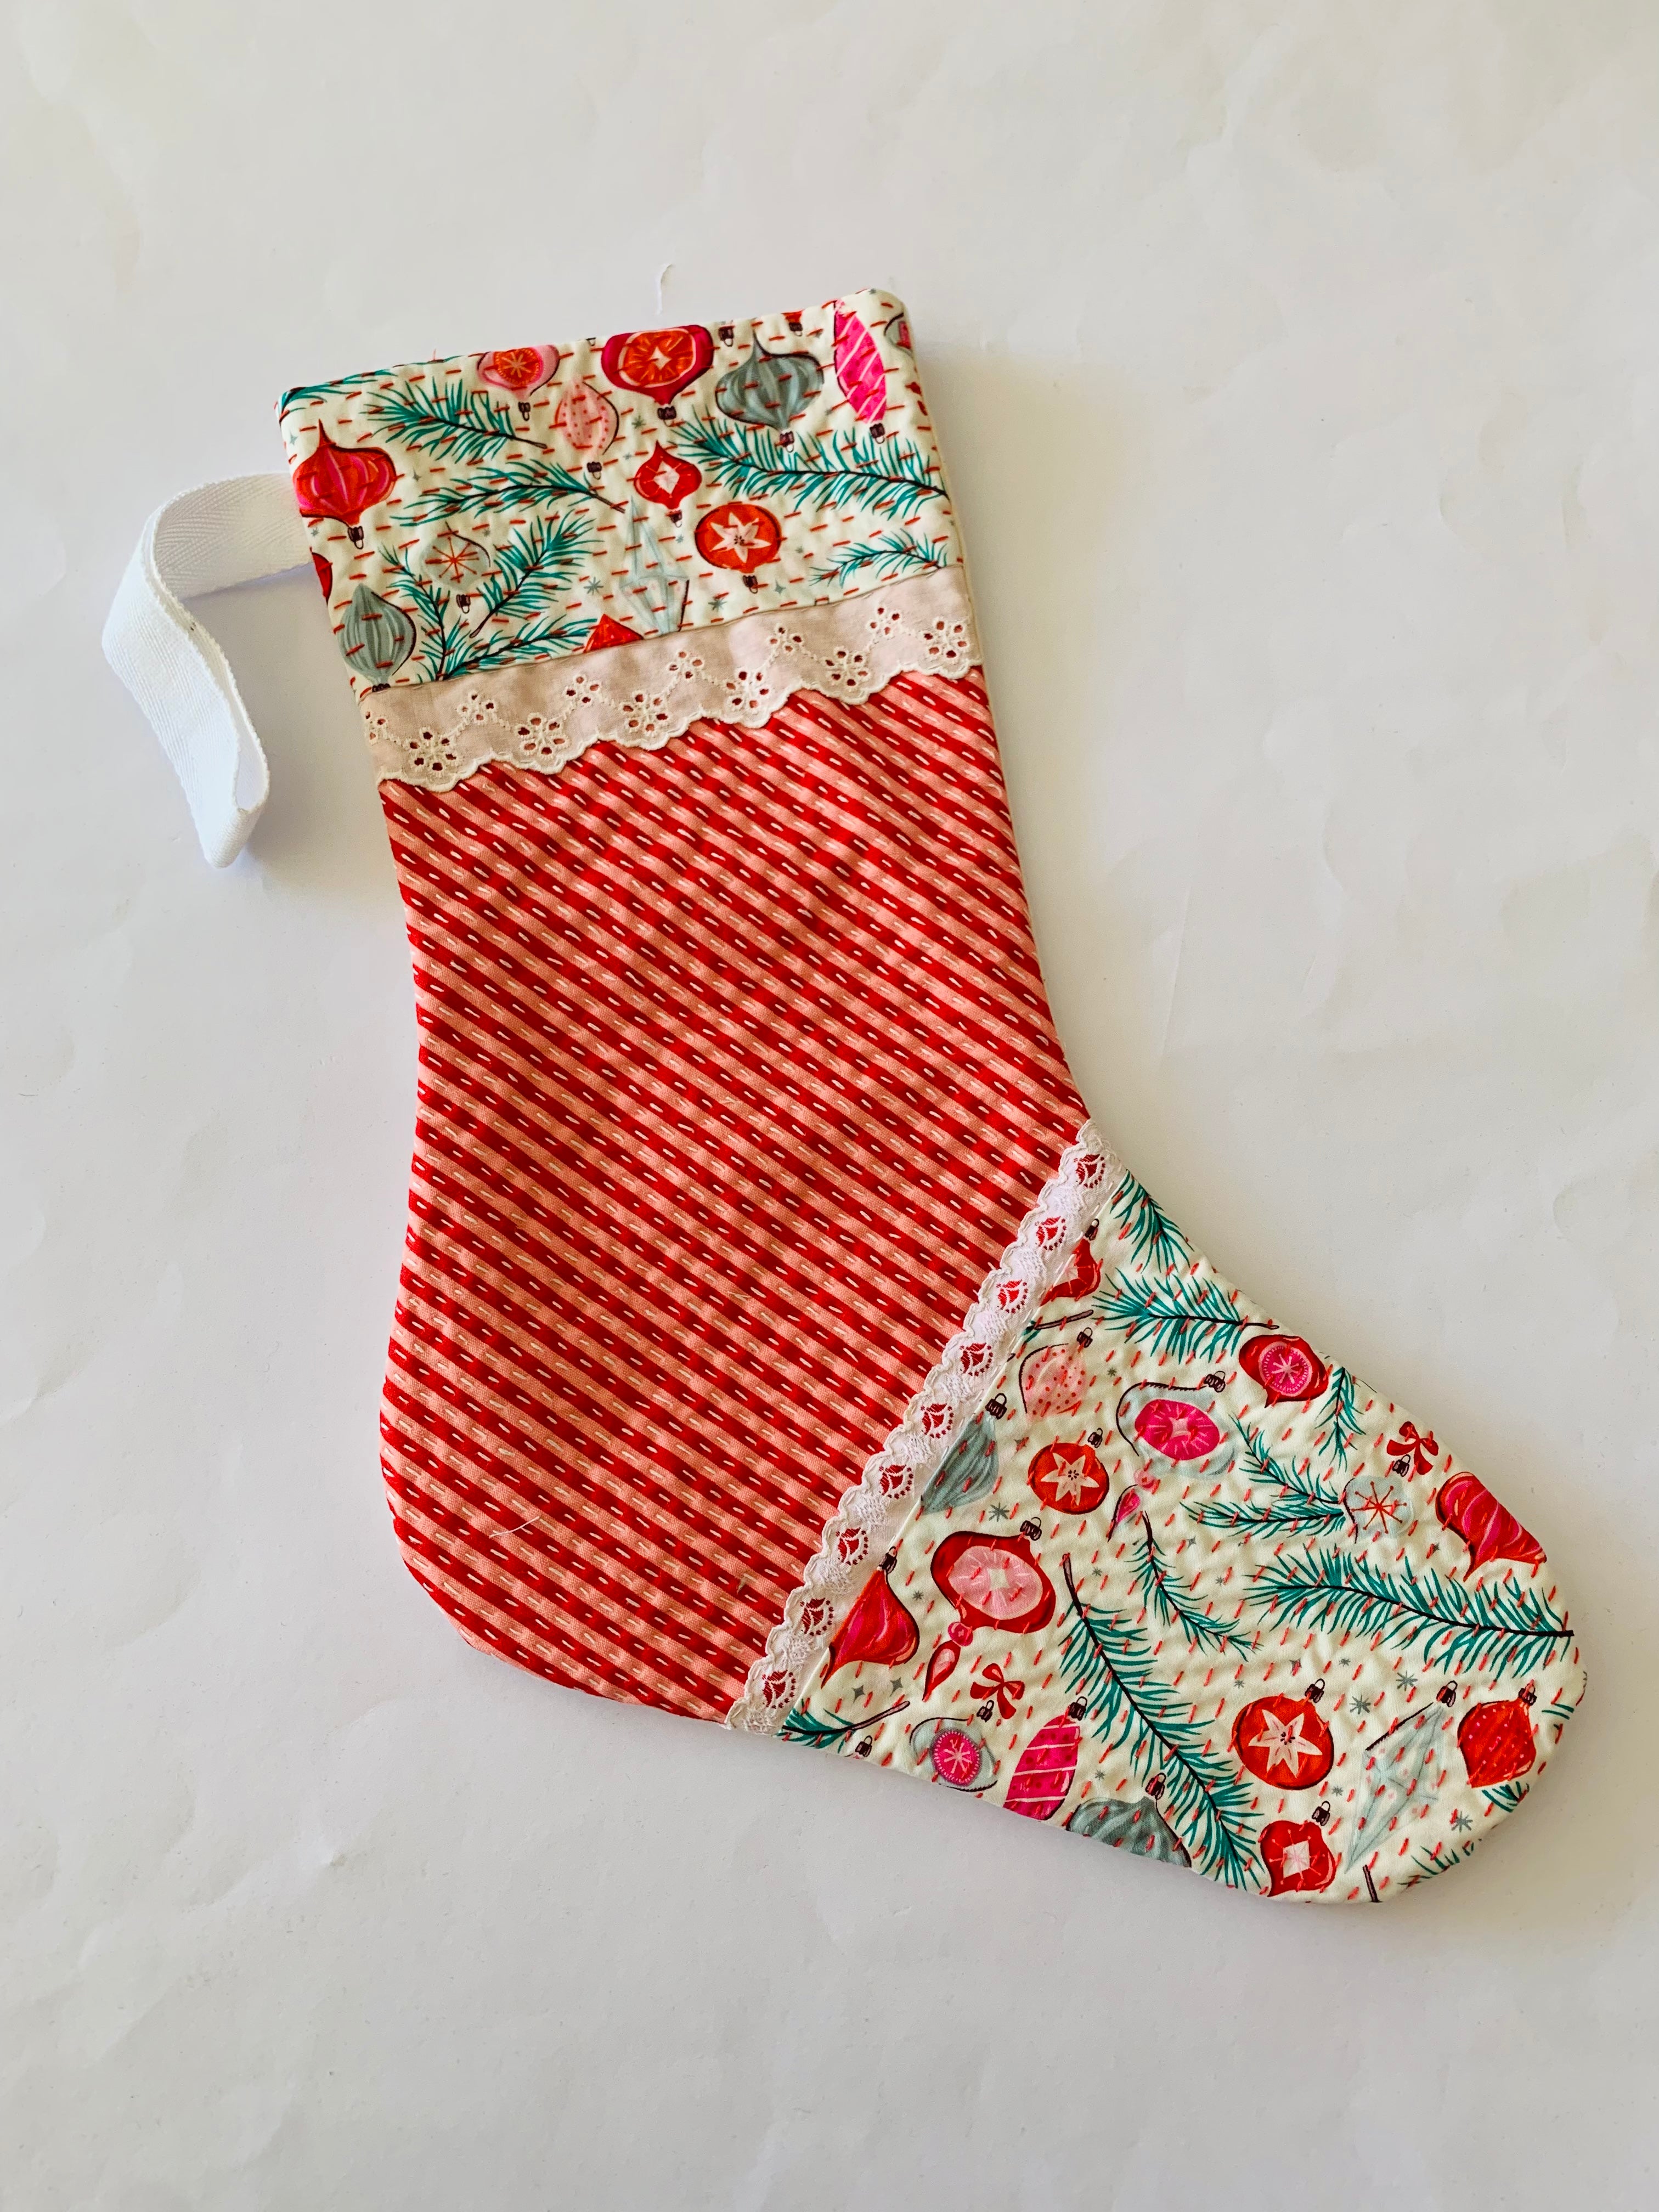 Hand stitched bespoke Christmas Stocking